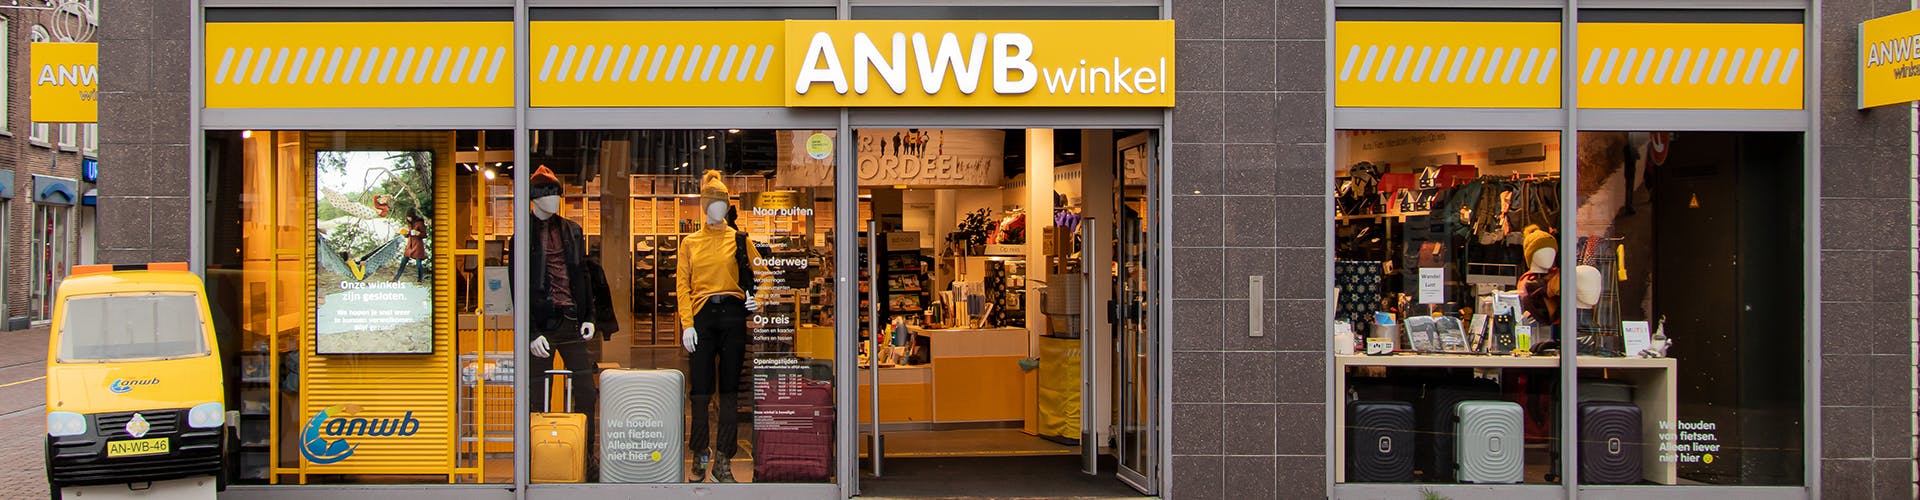 Typisch kogel Verhogen ANWB Winkel Meppel | ANWB Webwinkel